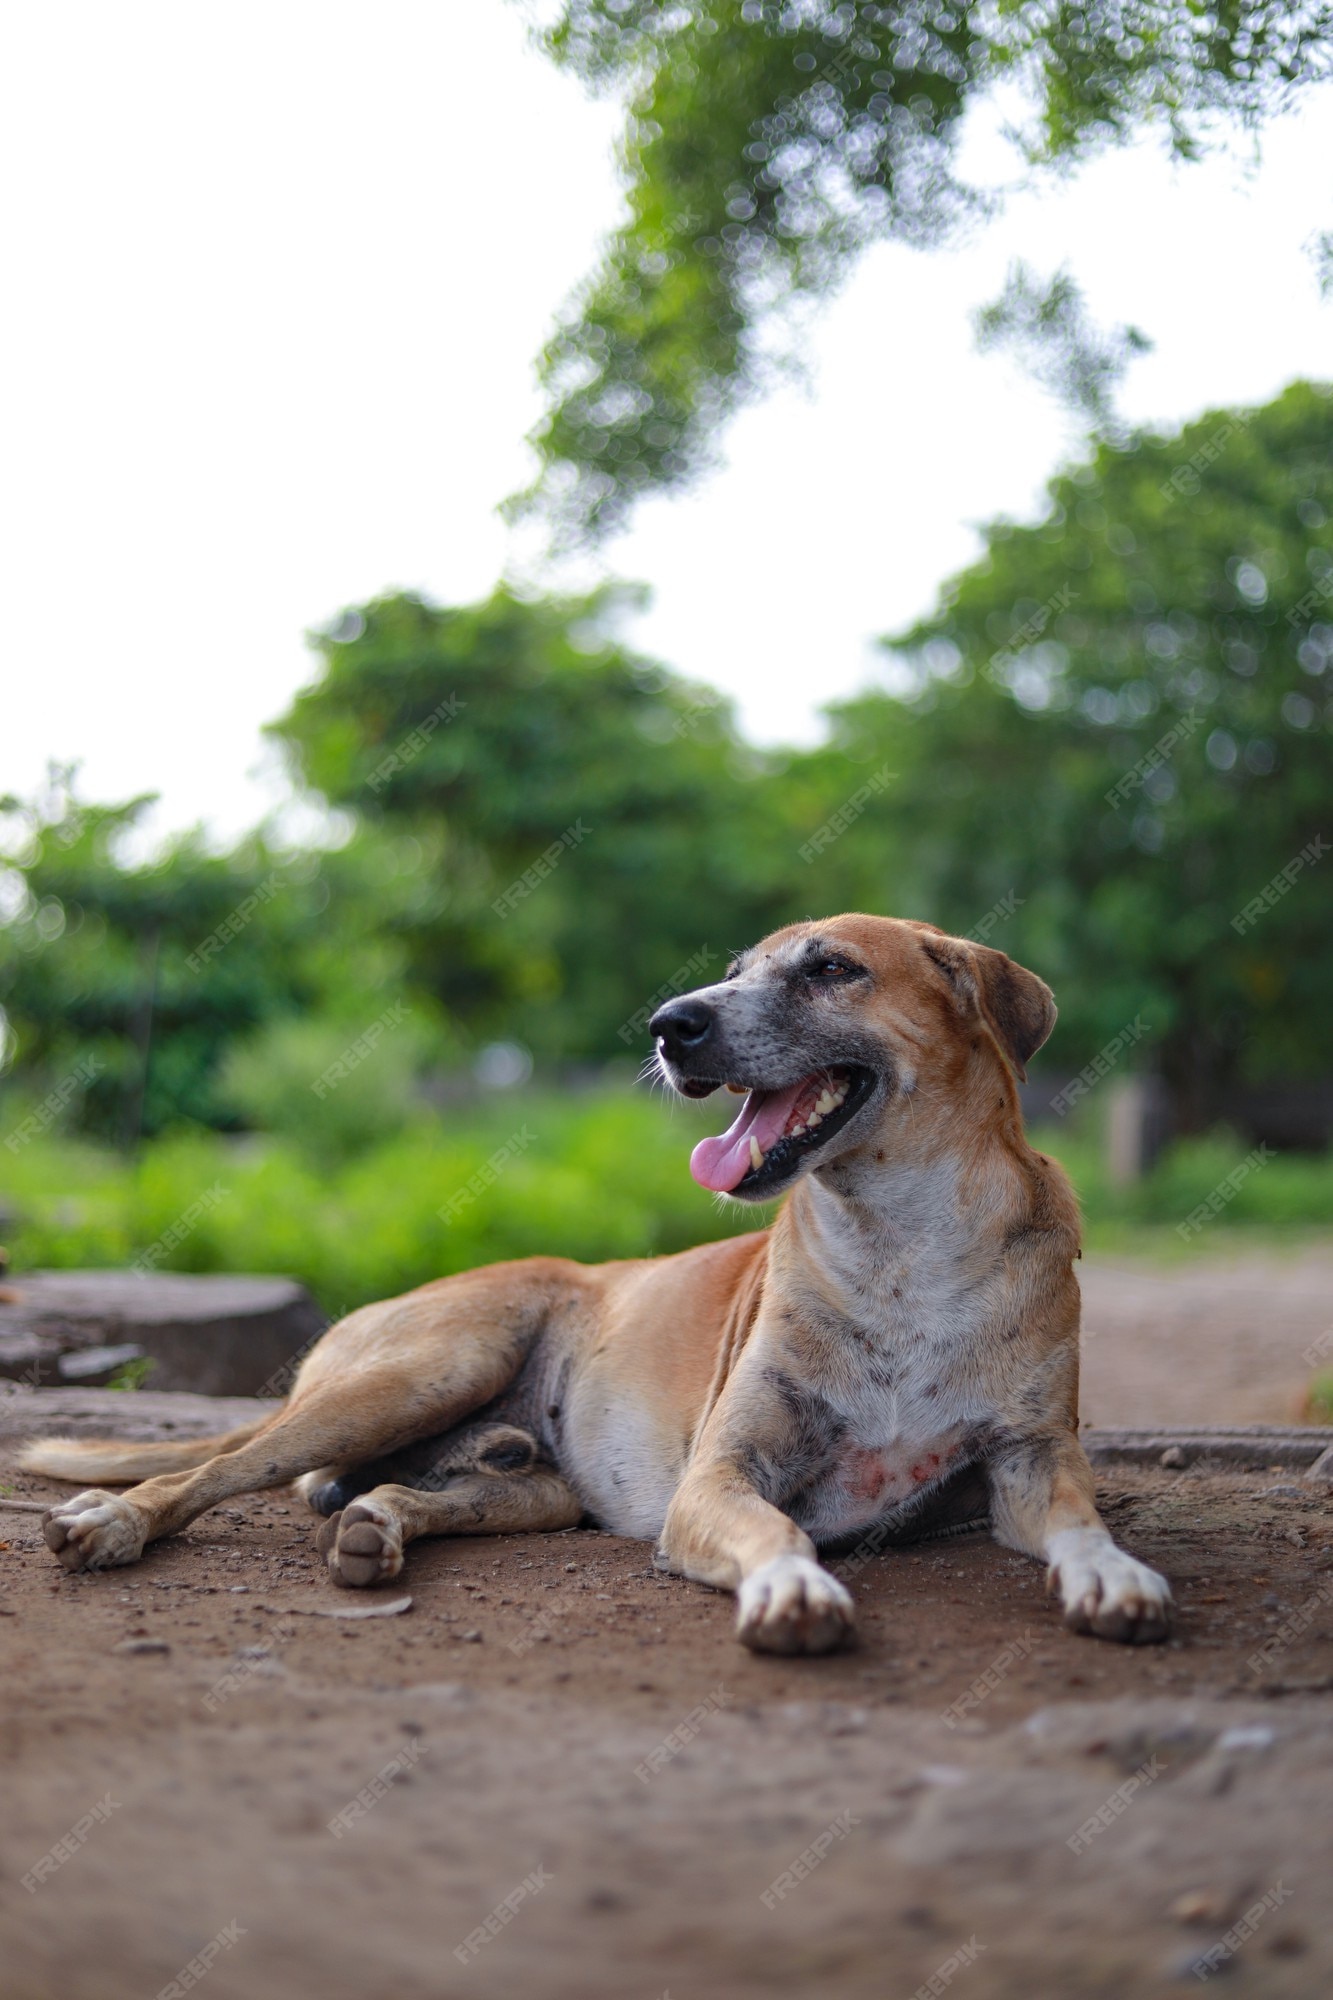 Premium Photo | Indian street dog laying on street road